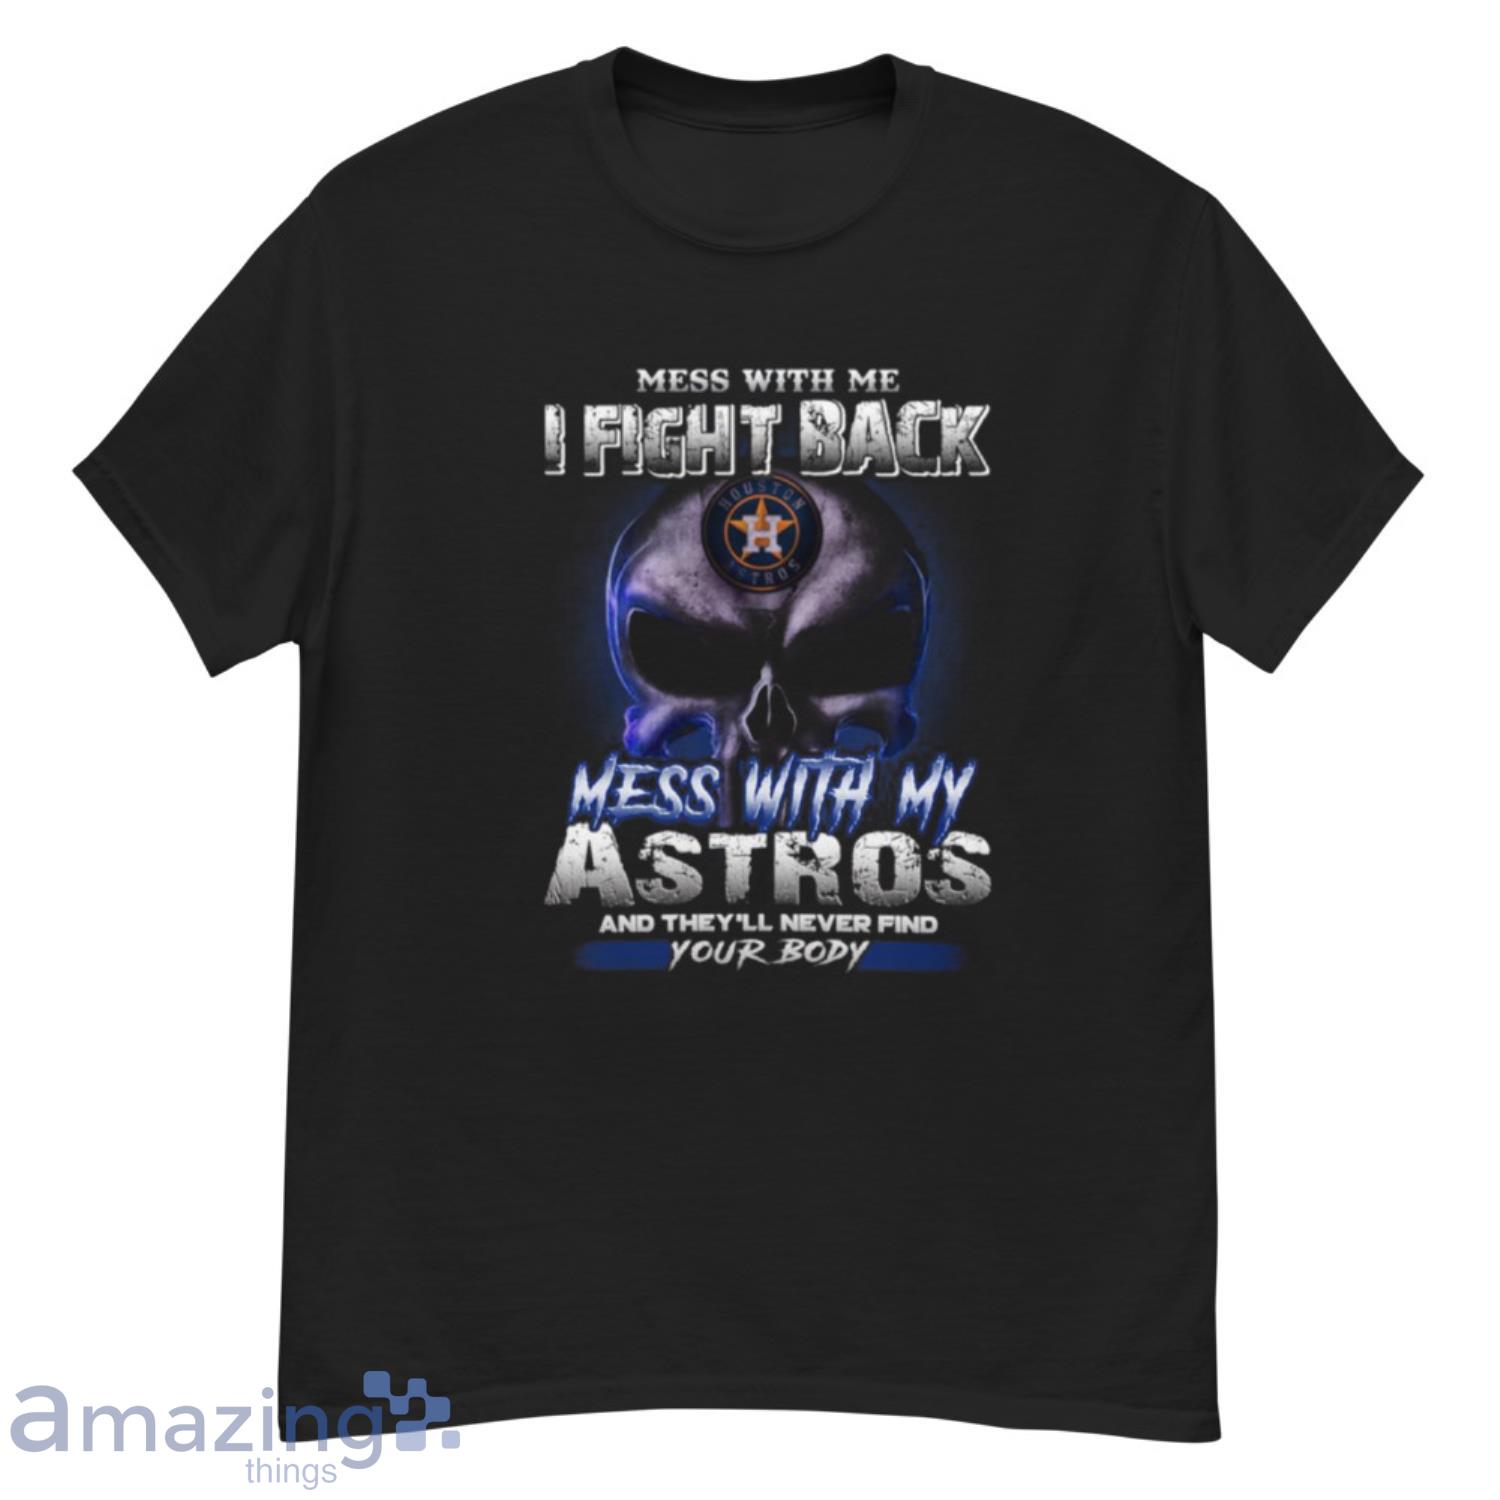 astros shirt near me